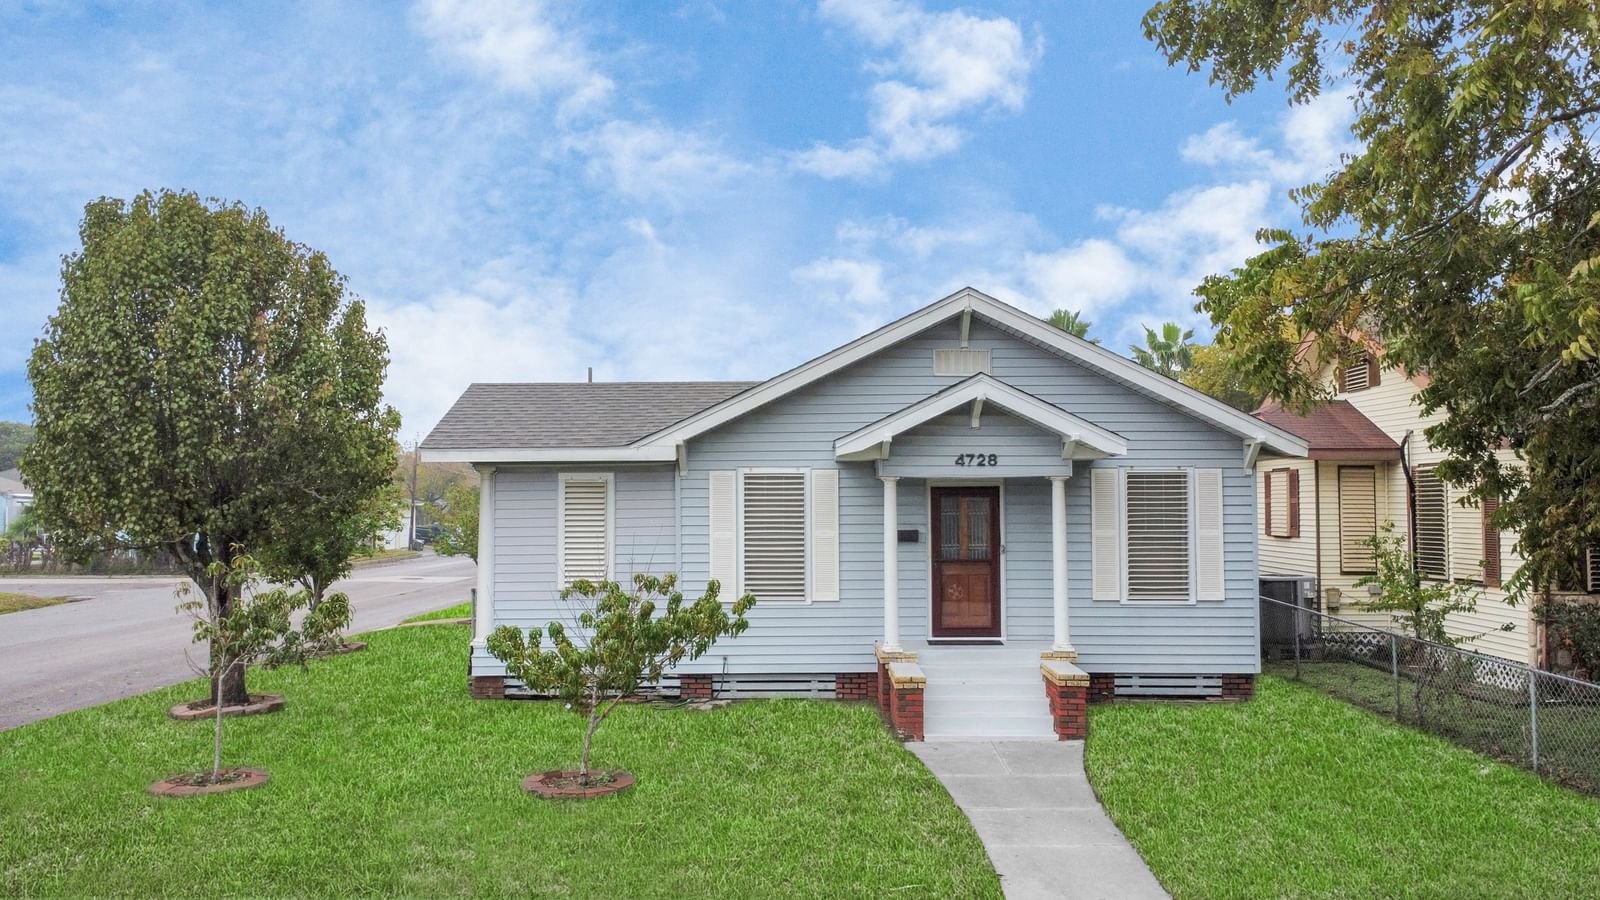 Real estate property located at 4728 Avenue N 1/2, Galveston, Menard Survey, Galveston, TX, US